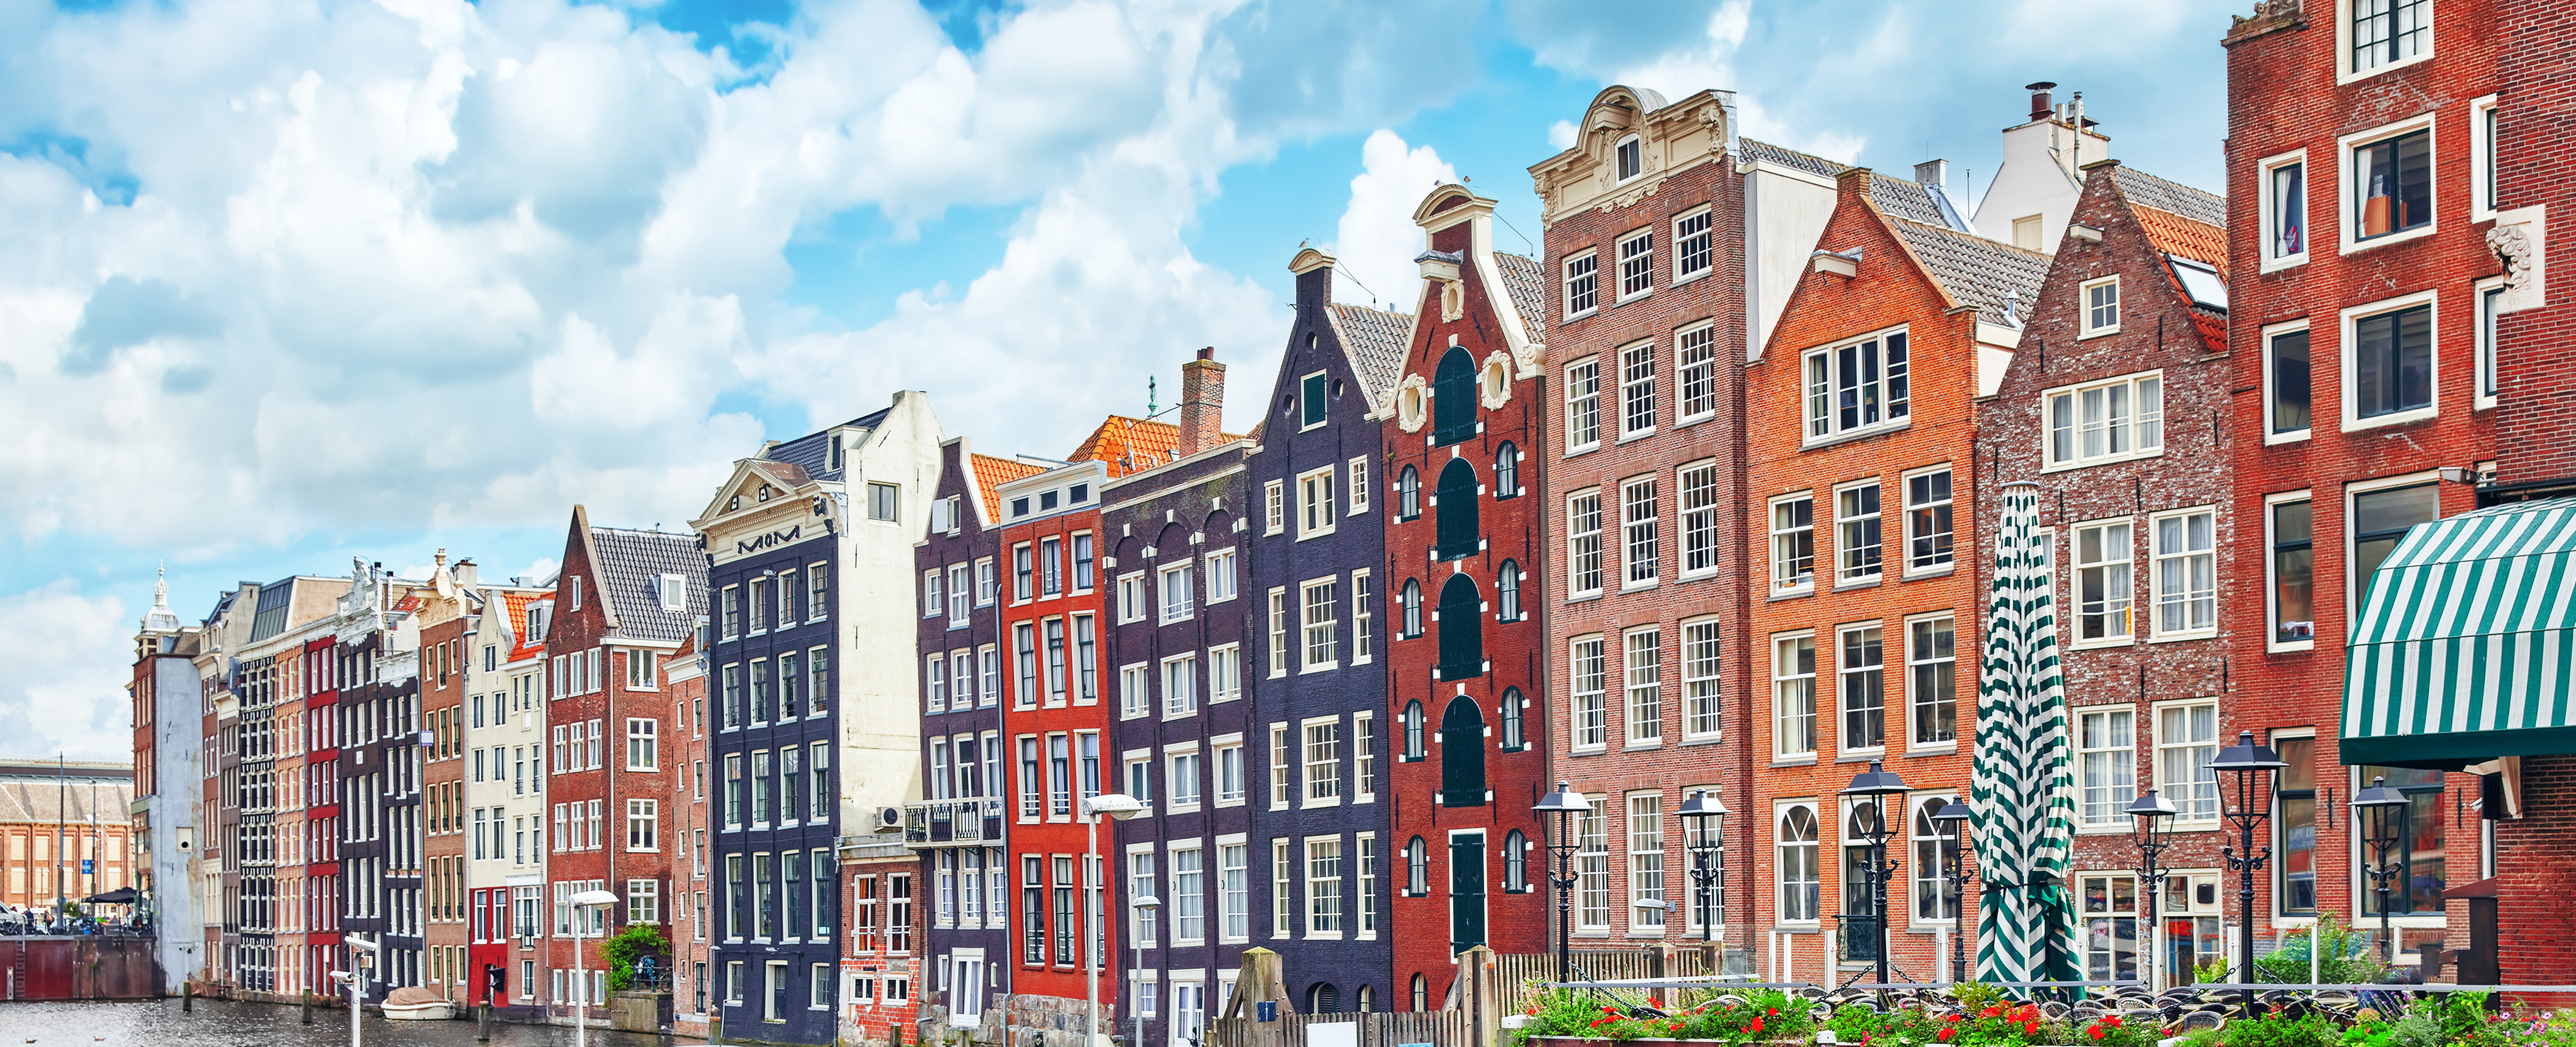 Amsterdam city photo